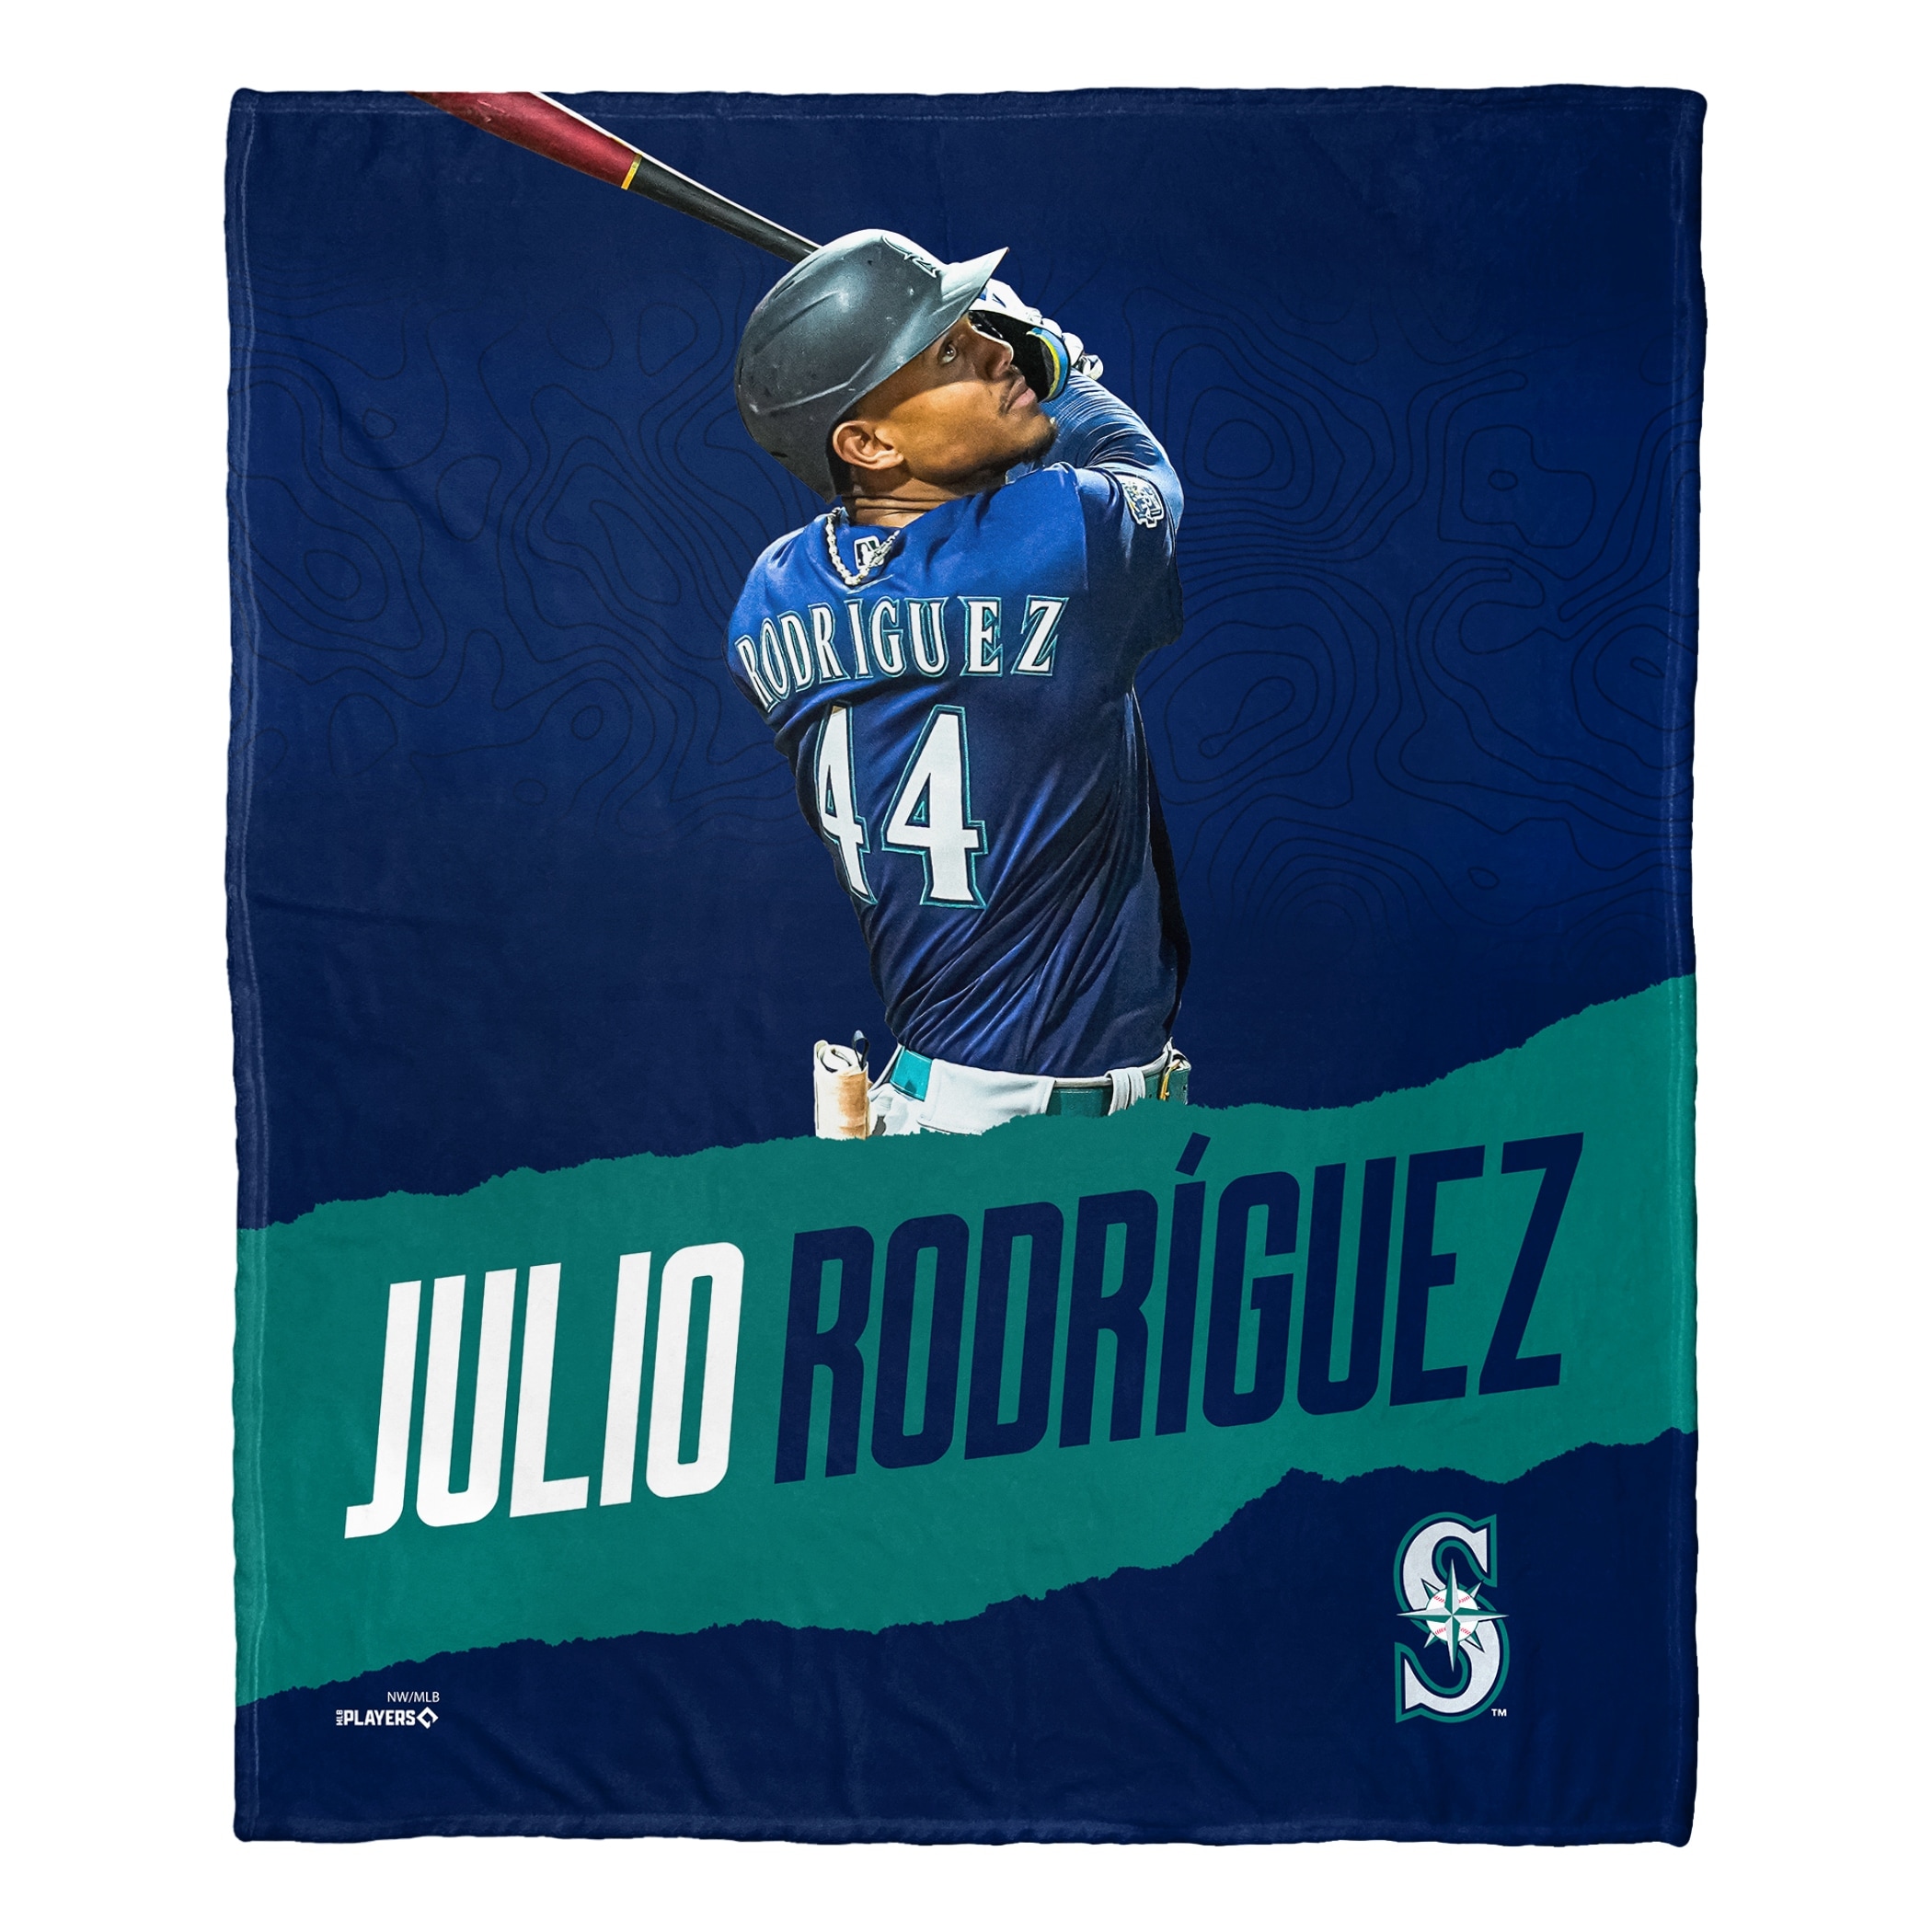 Julio Rodriguez Accessories for Sale